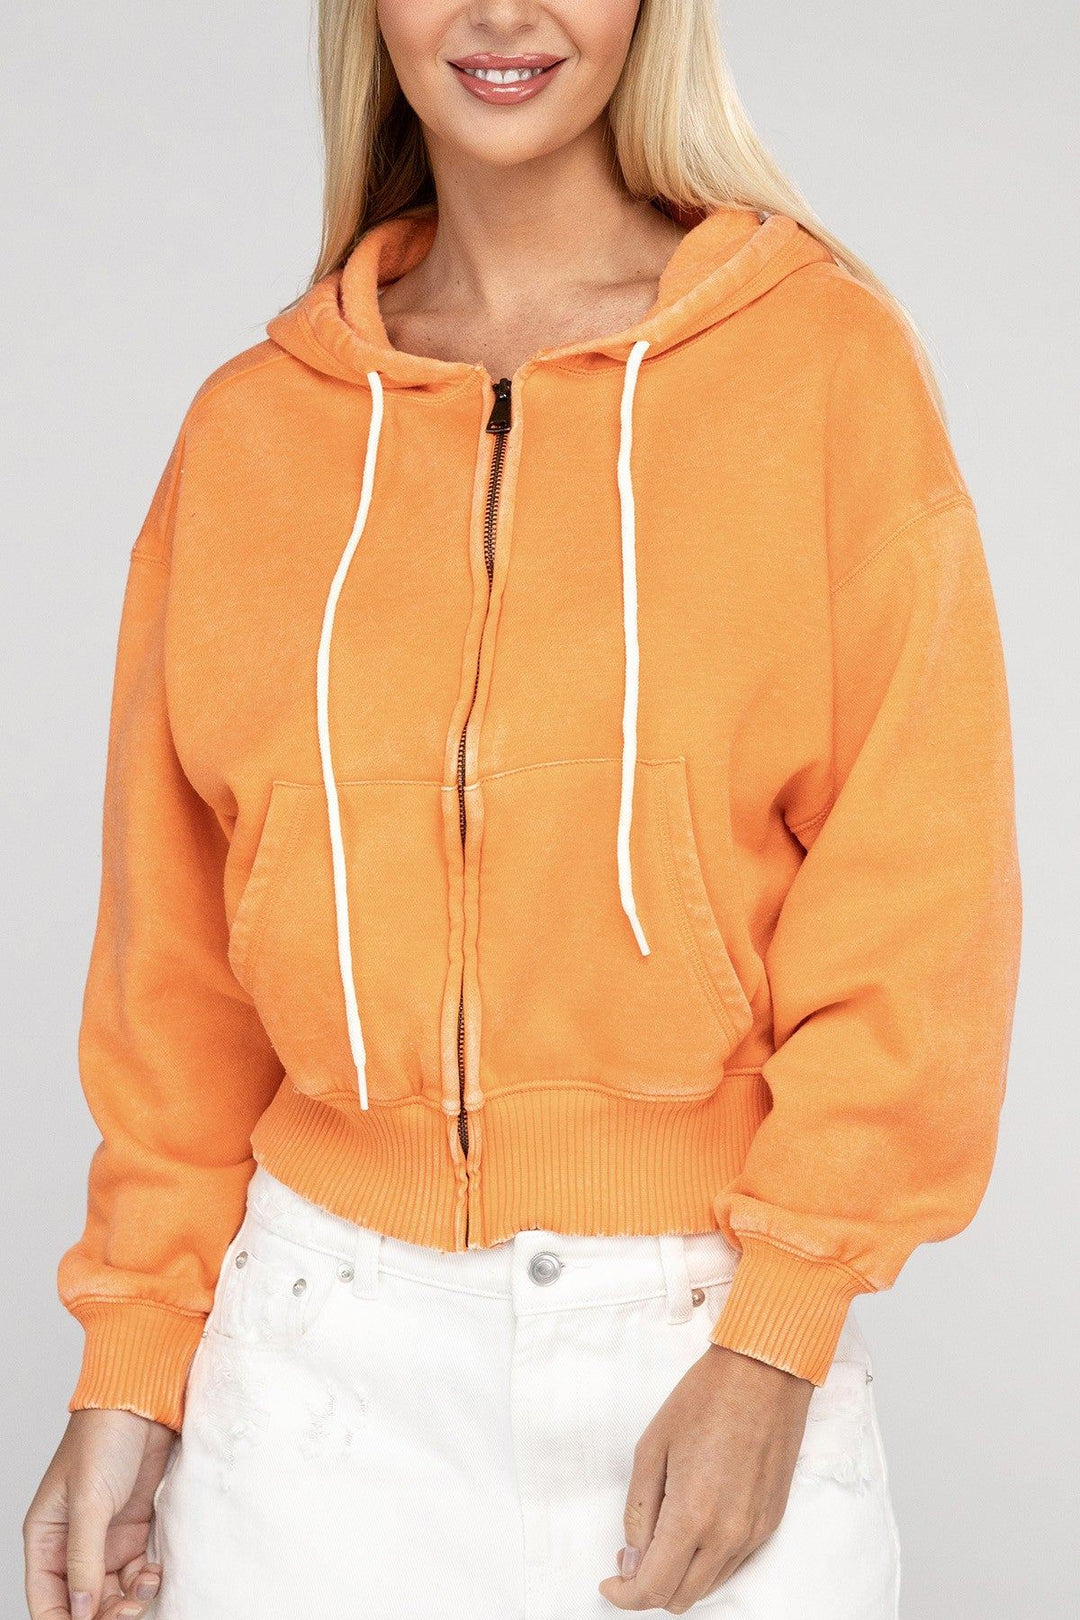 Zenana Cropped Sweatshirt - Inspired Eye Boutique